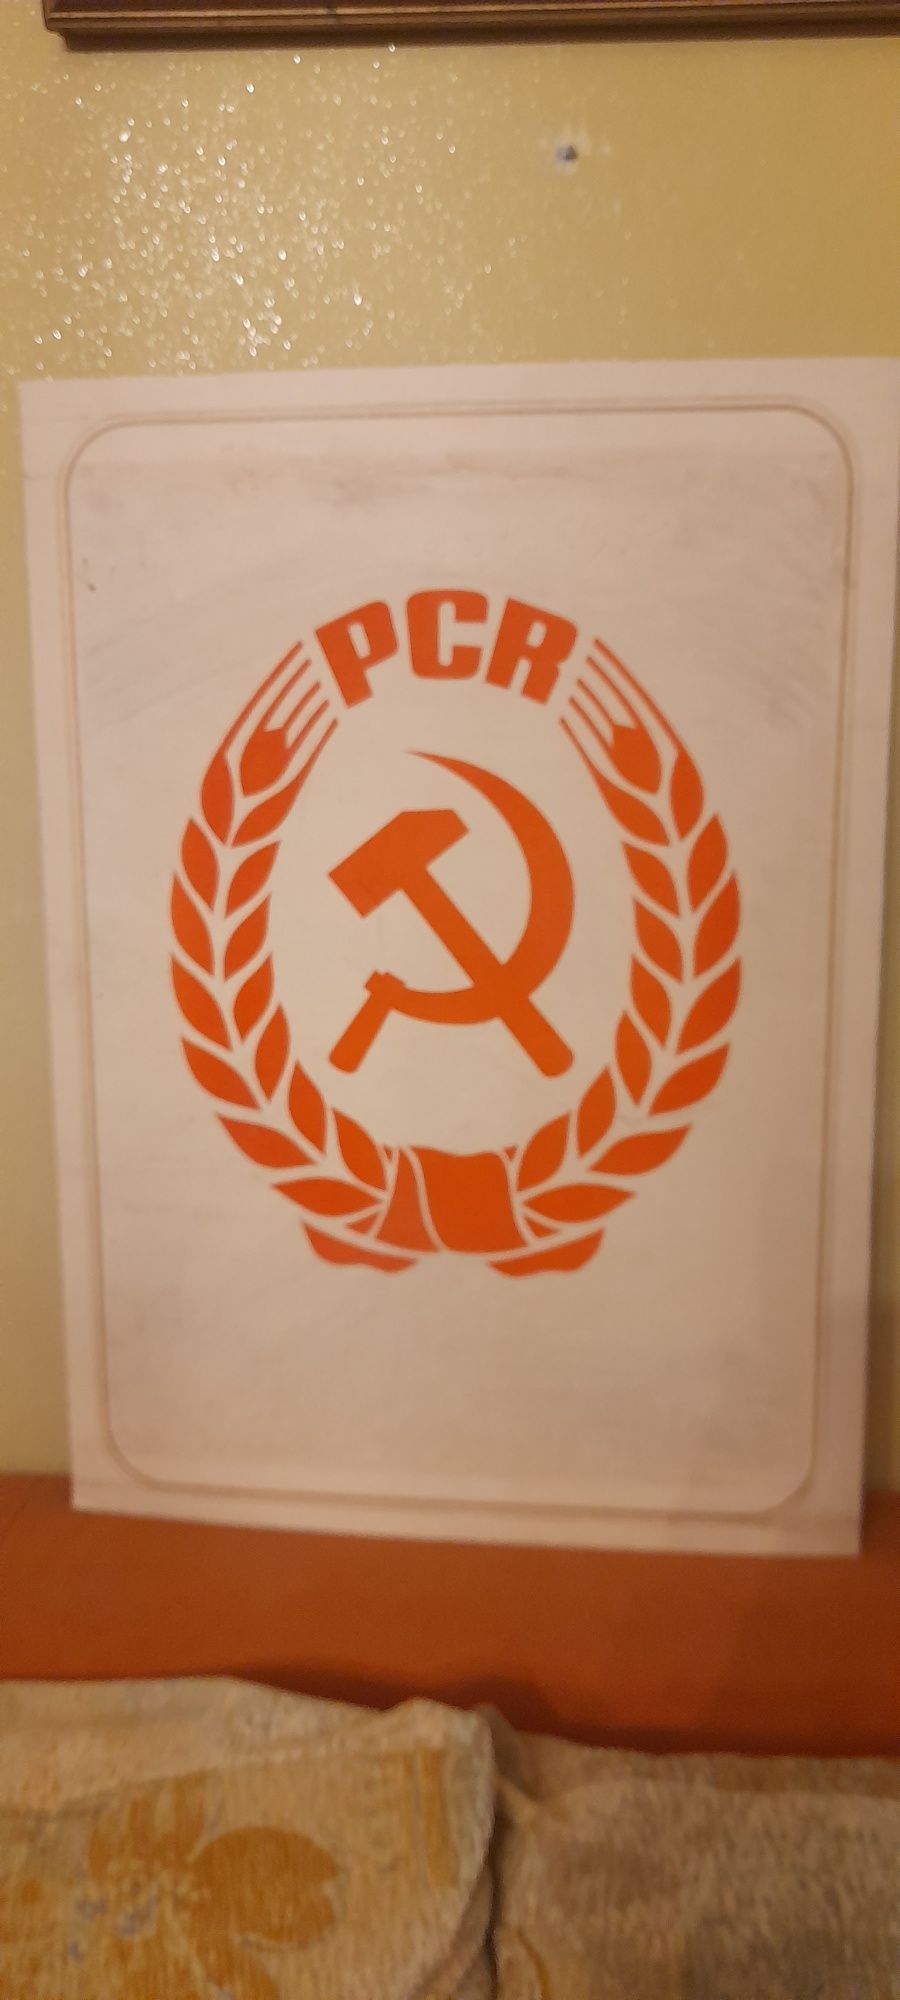 Afis comunist, emblema Partidului comunist roman